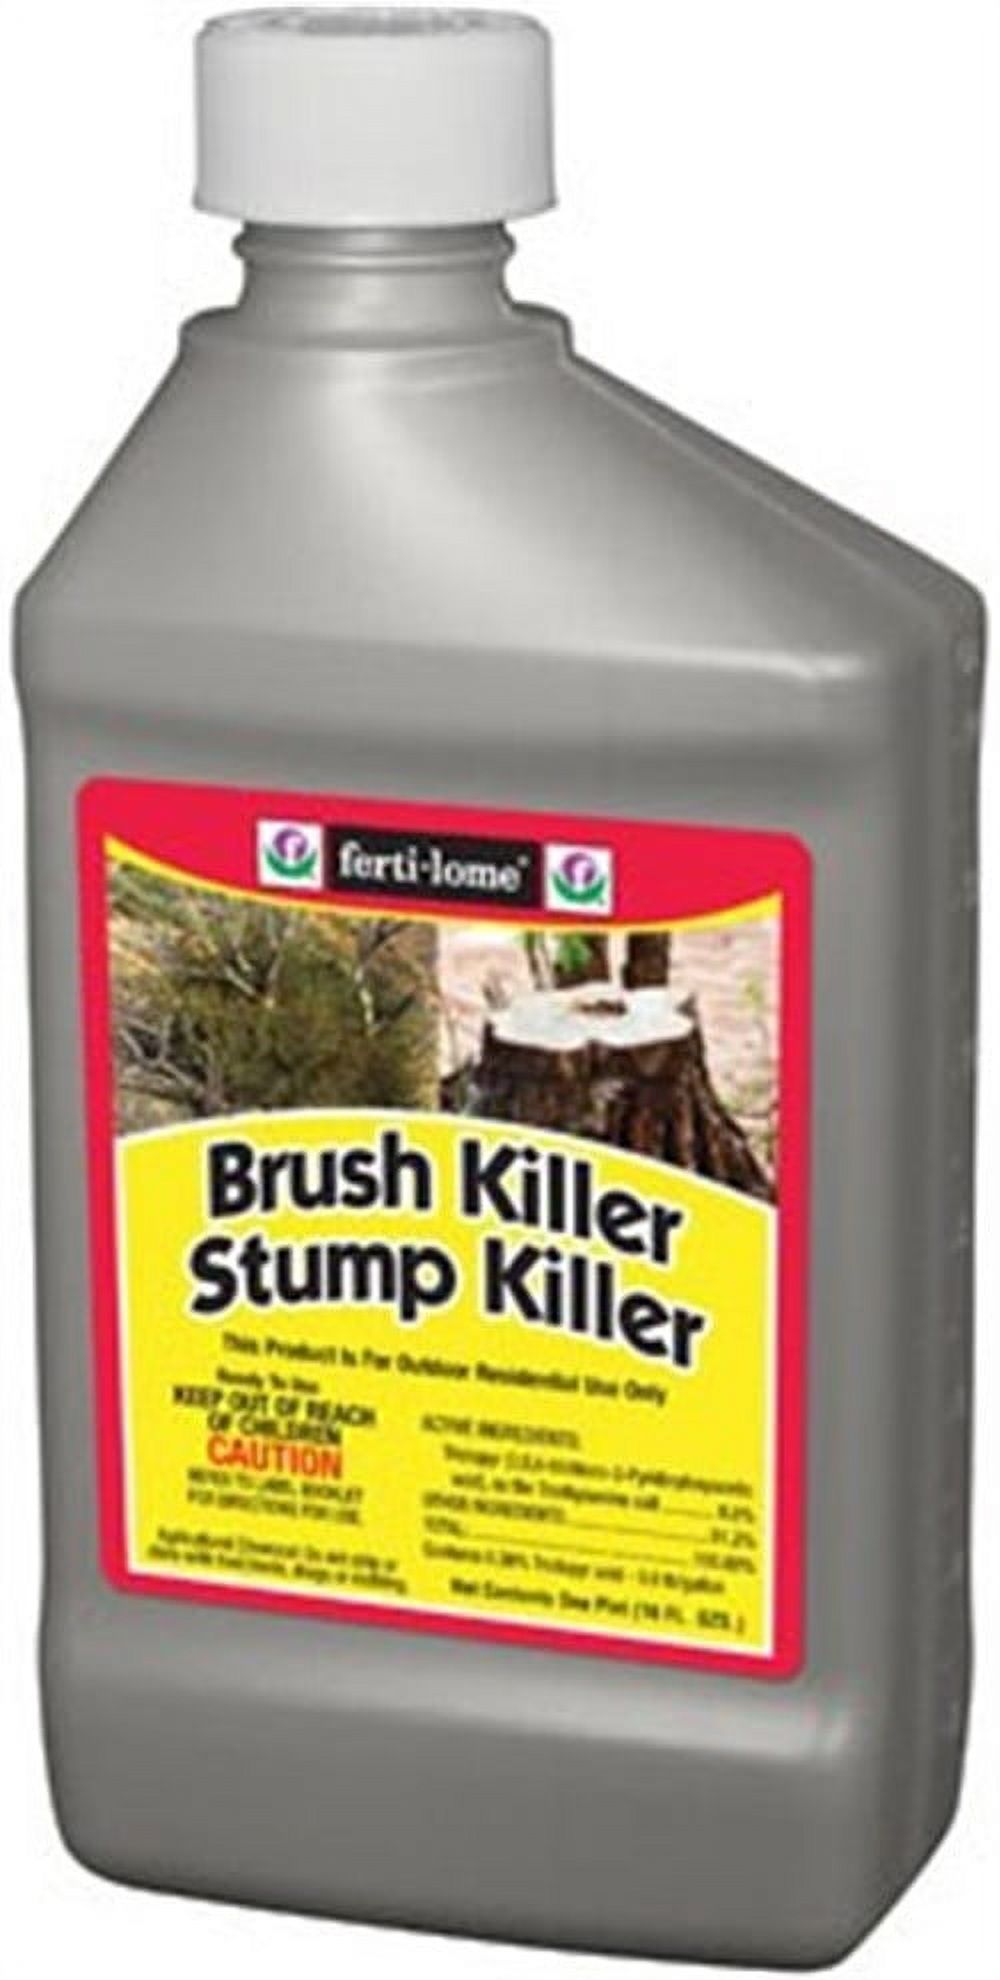 Ferti-lome 16 Oz. Concentrate Stump & Brush Vegetation Killer 11484 - image 2 of 2